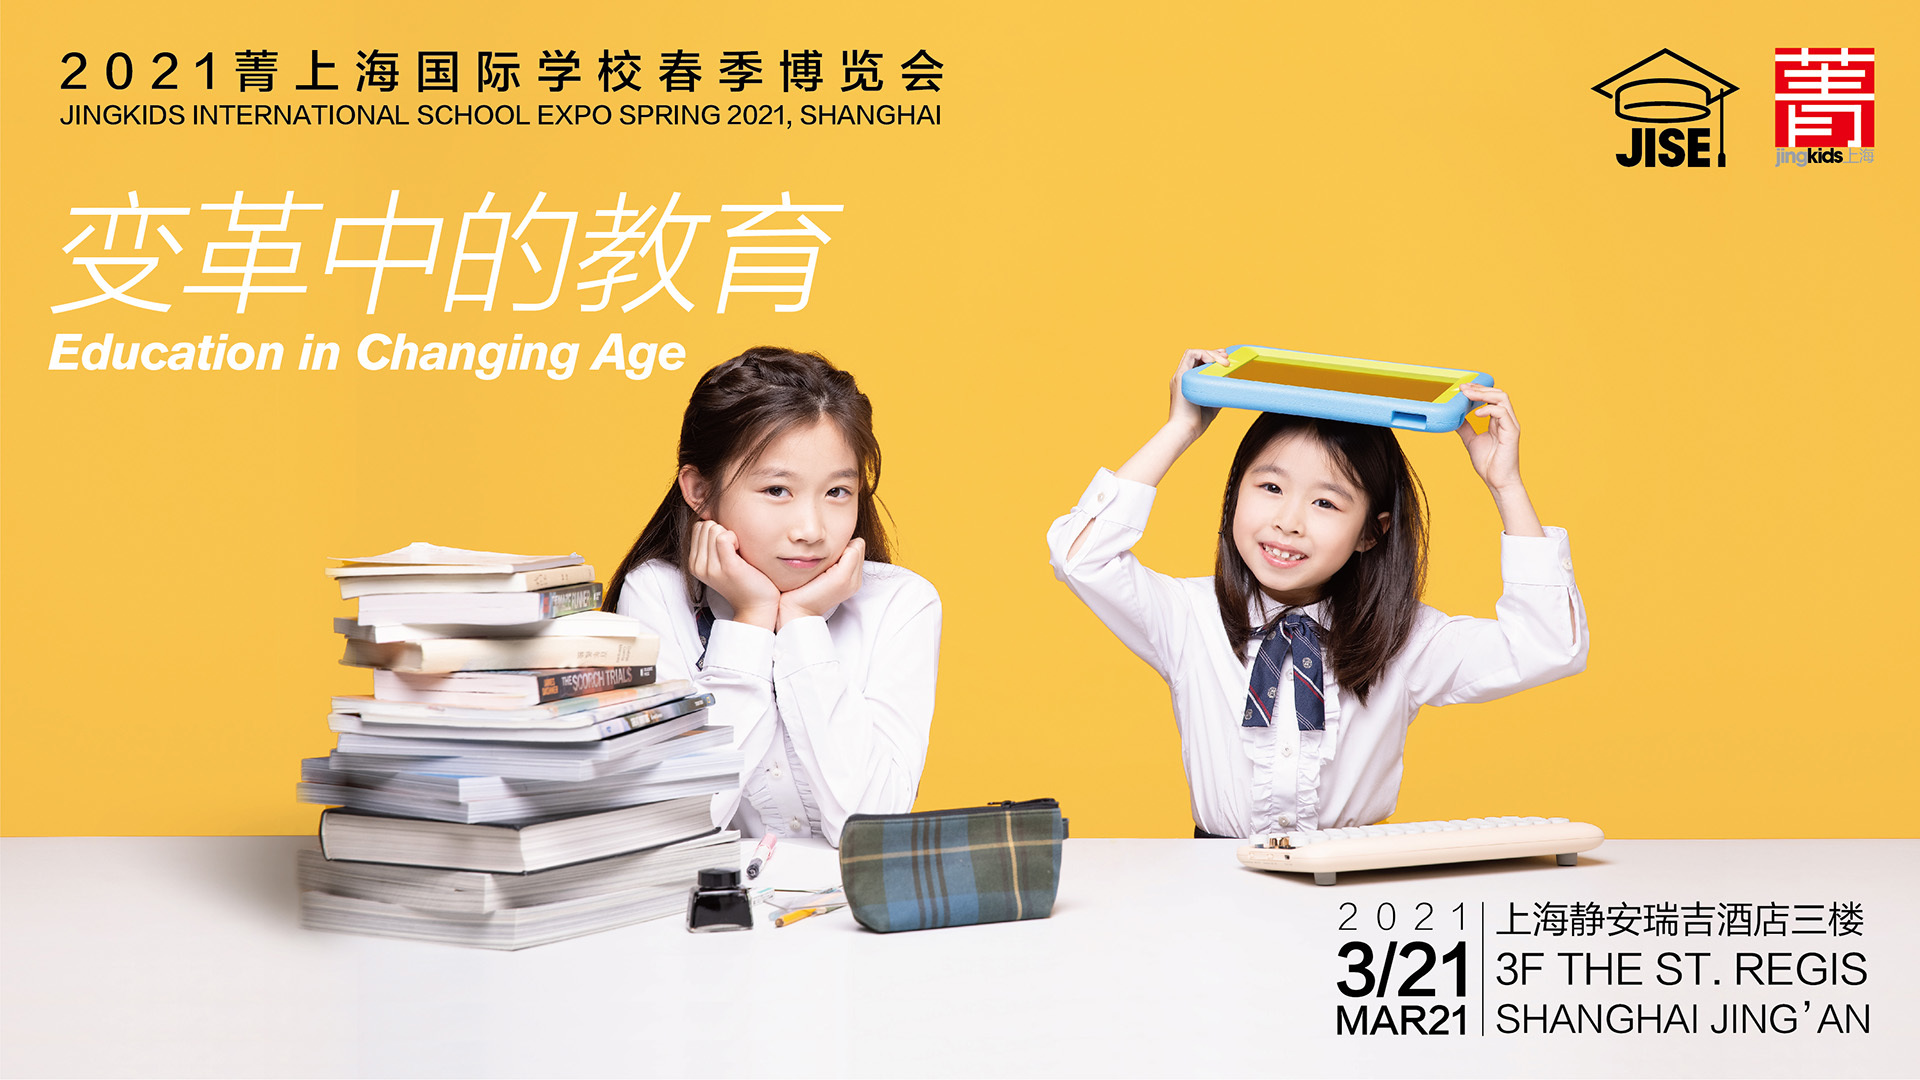 JingKids International School Expo Spring 2021, Shanghai